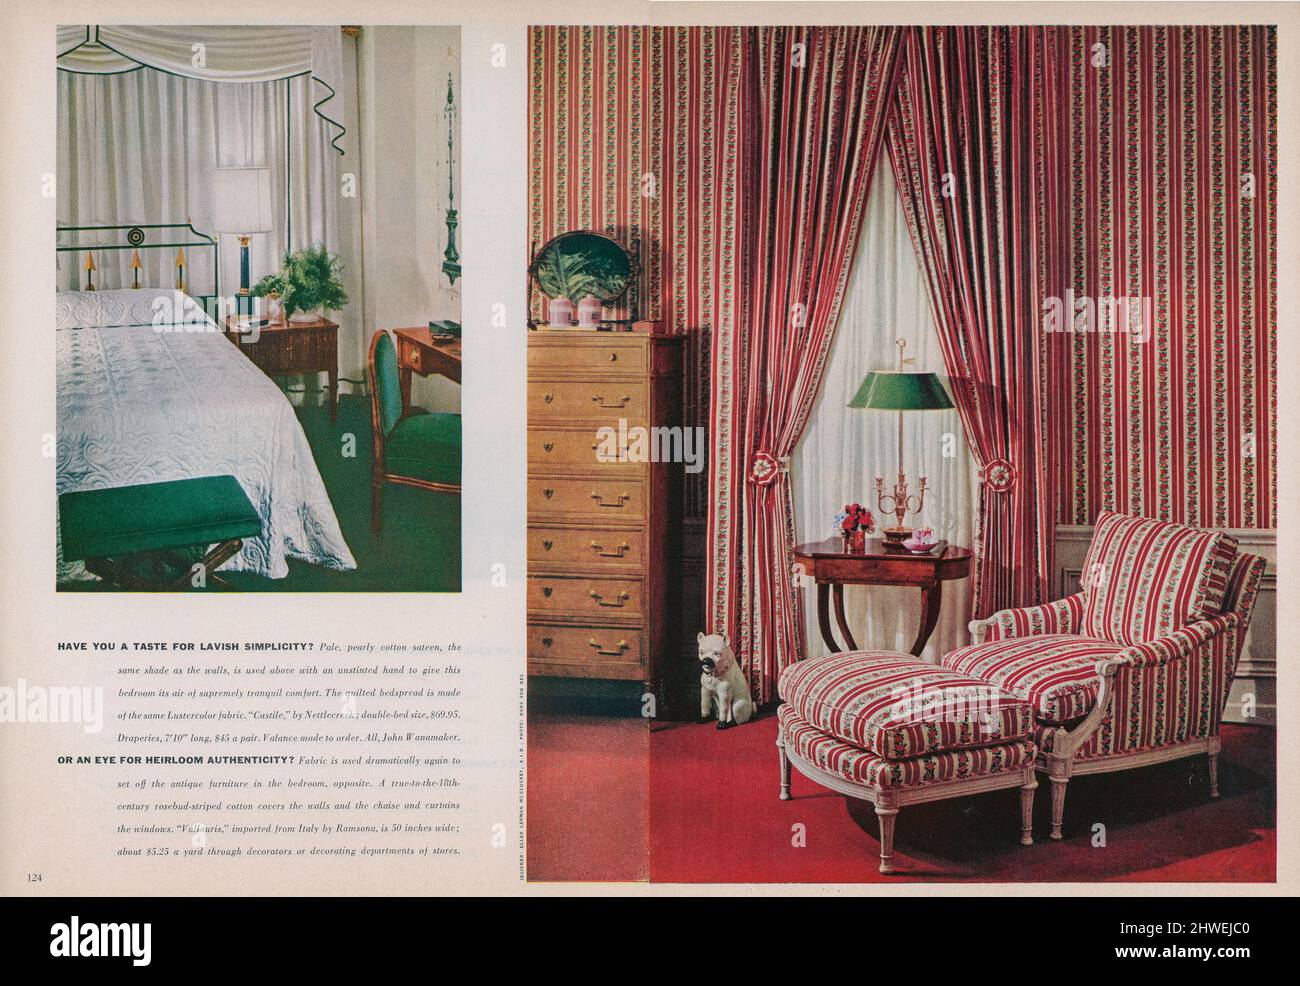 Vintage March 1962 "Good Housekeeping" Magazine advert, USA Foto Stock